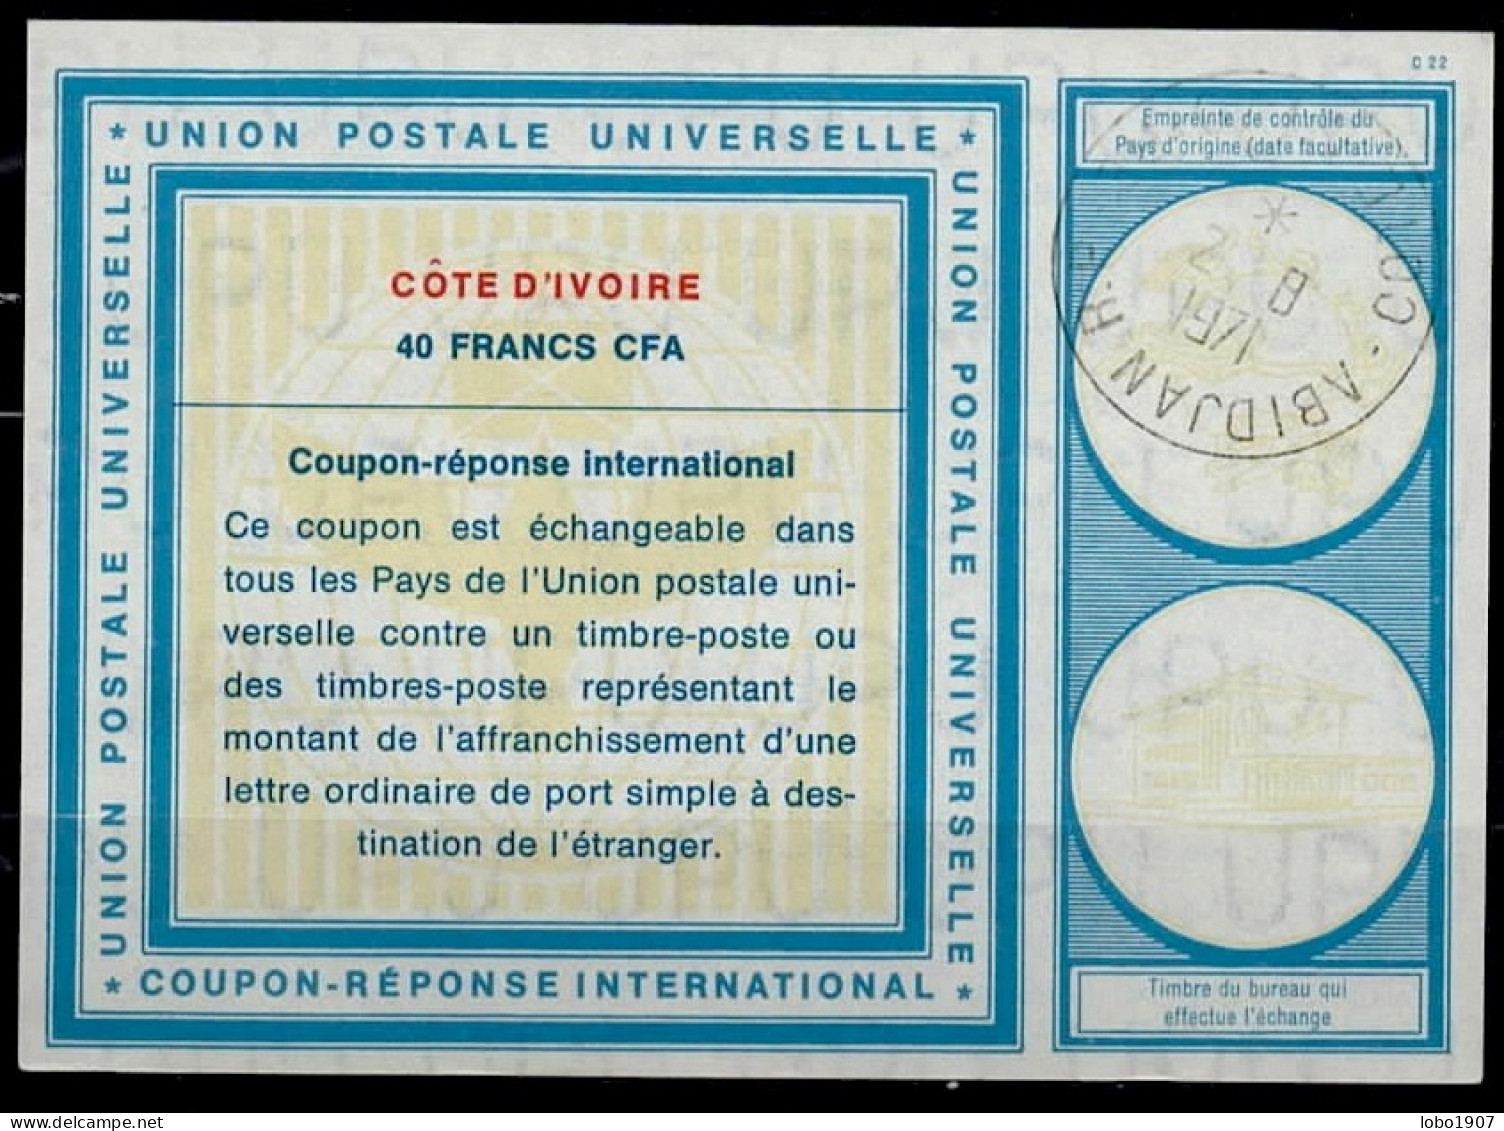 CÔTE D'IVOIRE IVORY COAST Vi19  40 FRANCS CFA  International Reply Coupon Reponse Antwortschein IRC IAS ABIDJAN 02.08.71 - Costa De Marfil (1960-...)